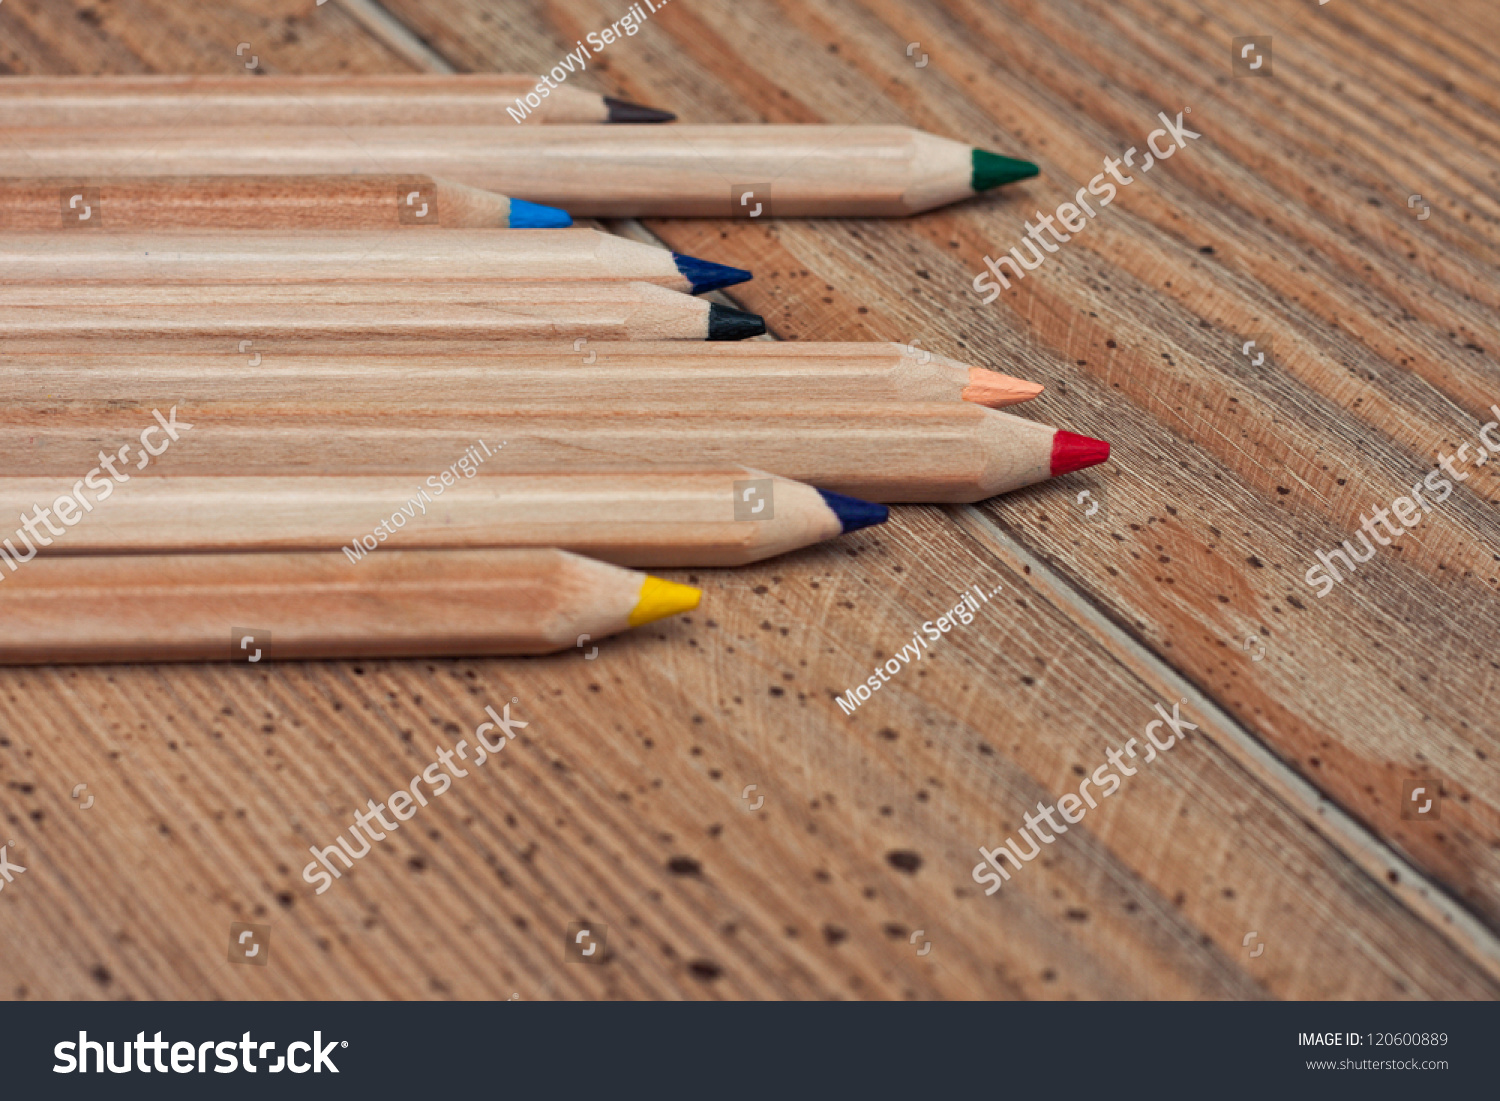 Several Multicolored Pencils On A Wooden Desk Stock Photo 120600889 ...